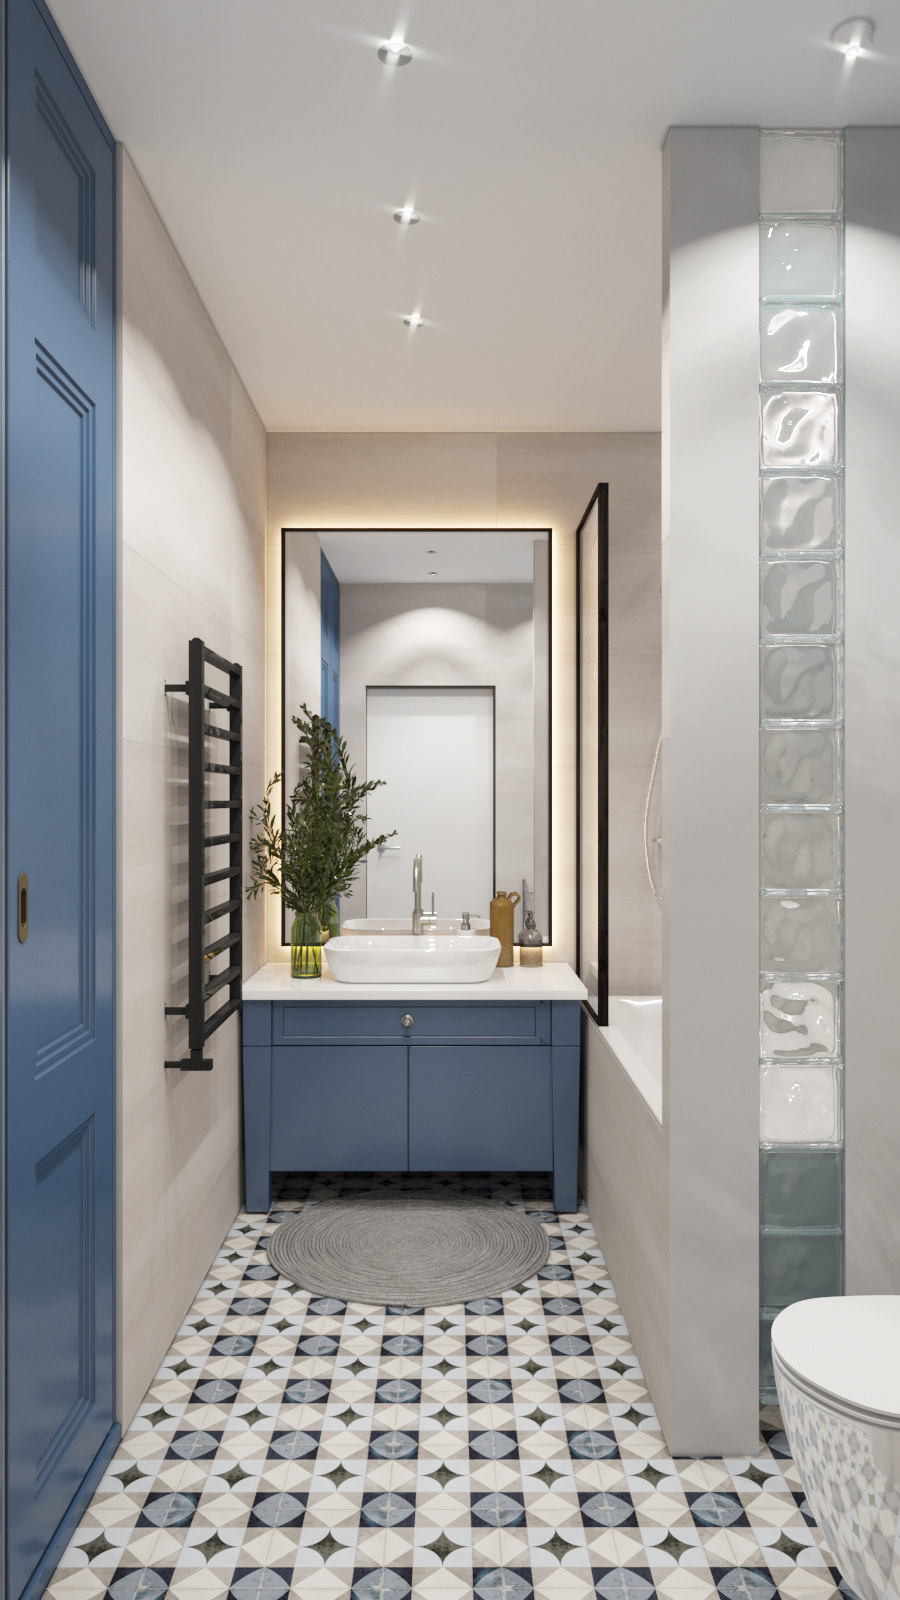 400+ Beautiful Bathroom Ideas - NEW UPDATE